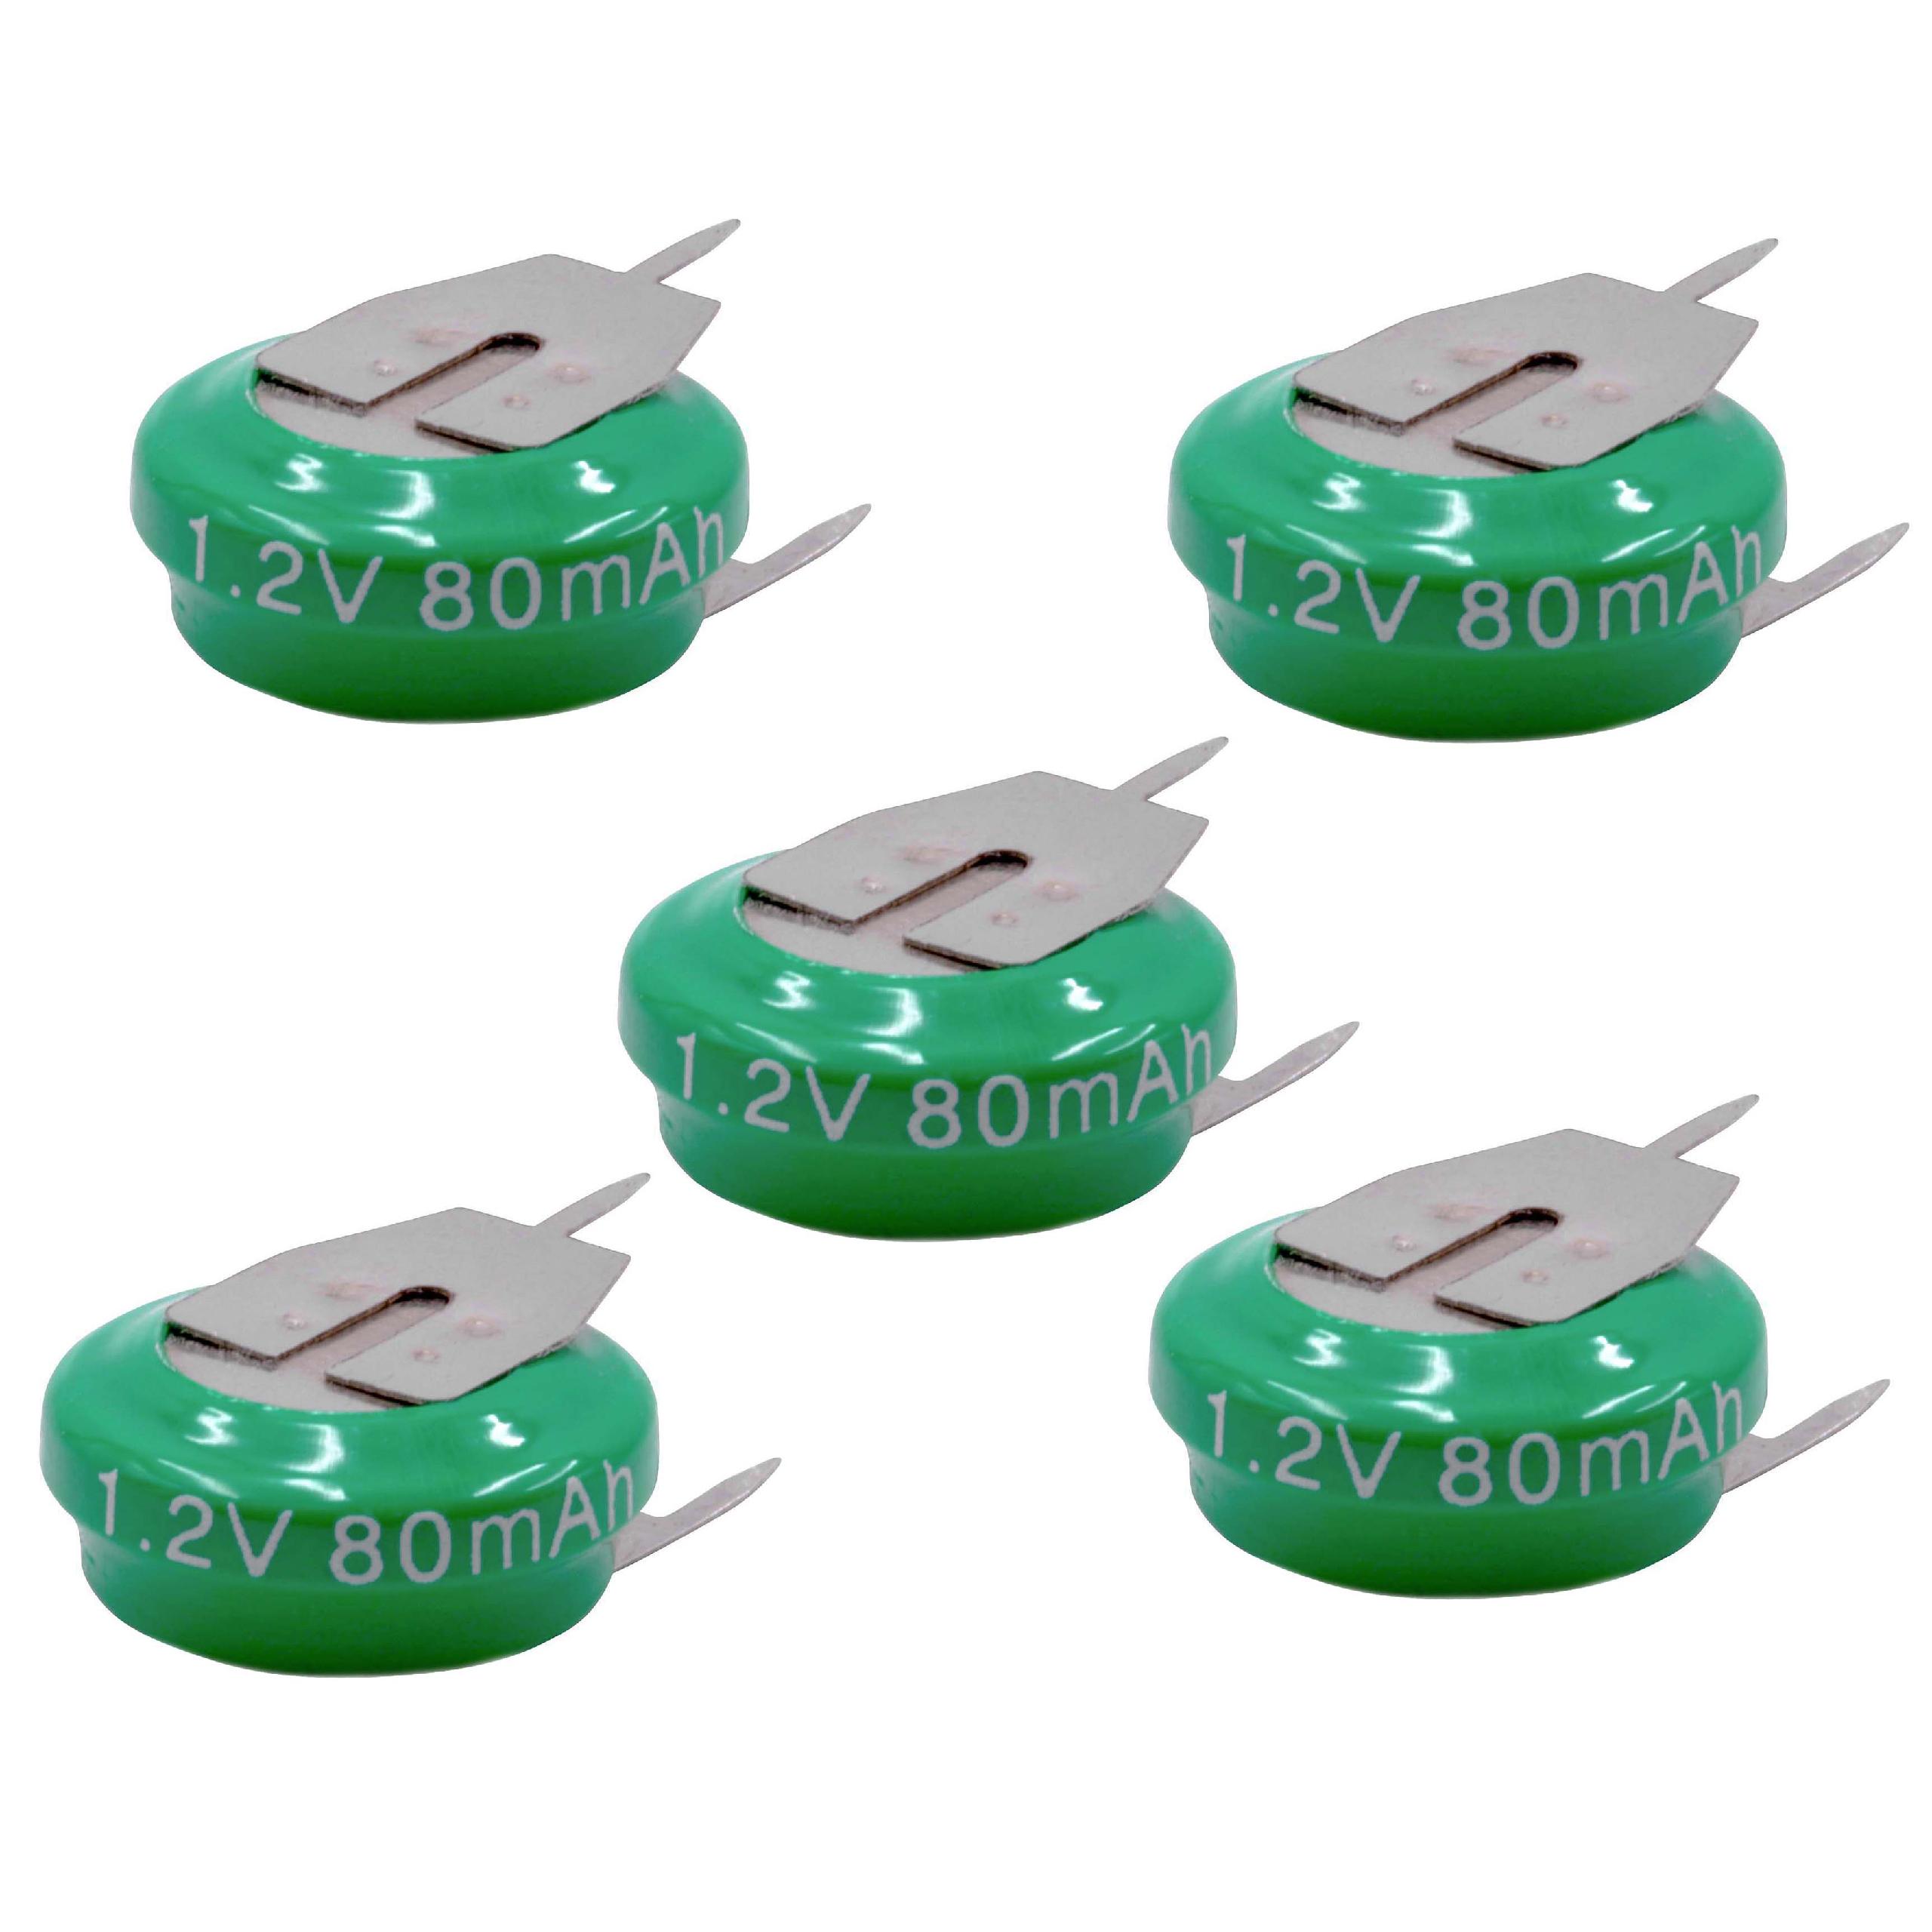 5x Akumulator guzikowy (1x ogniwo) typ 3 pin do modeli, lamp solarnych itp. zamiennik - 80 mAh 1,2 V NiMH